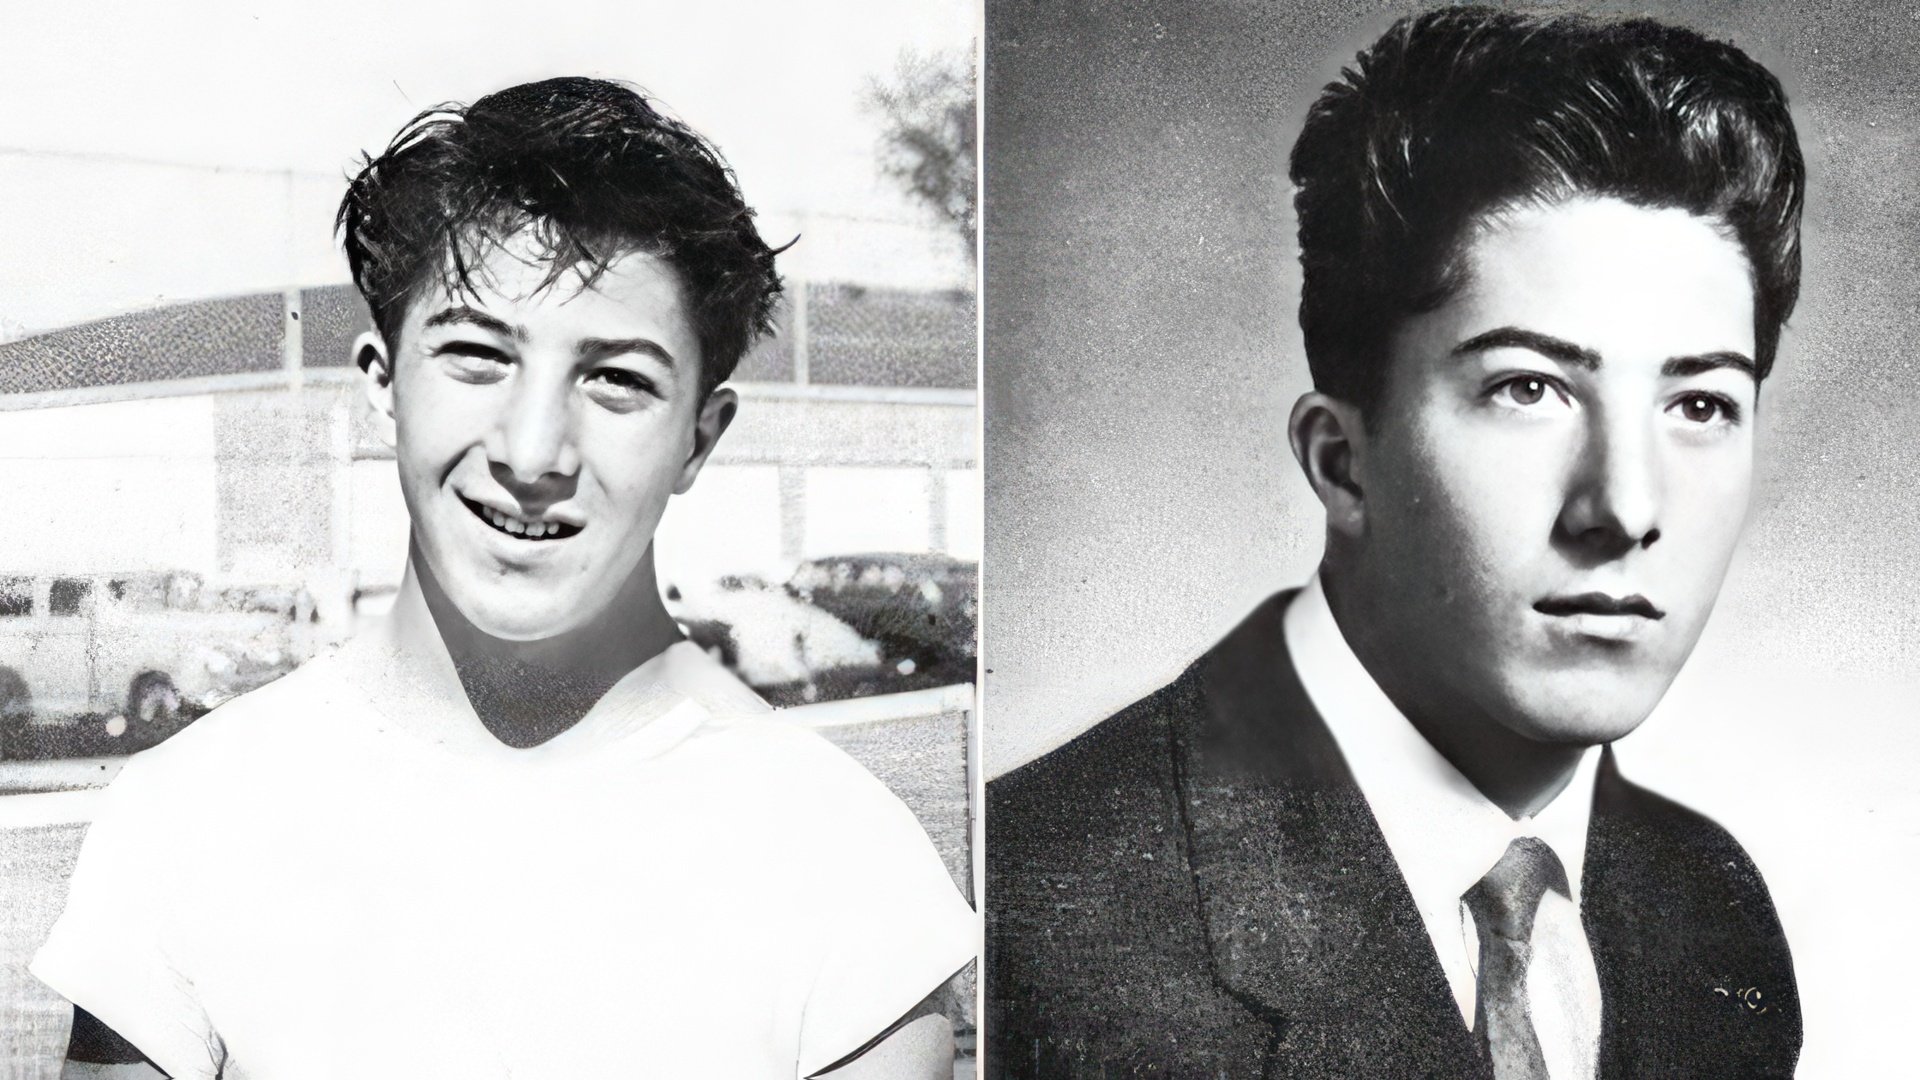 Dustin Hoffman in youth